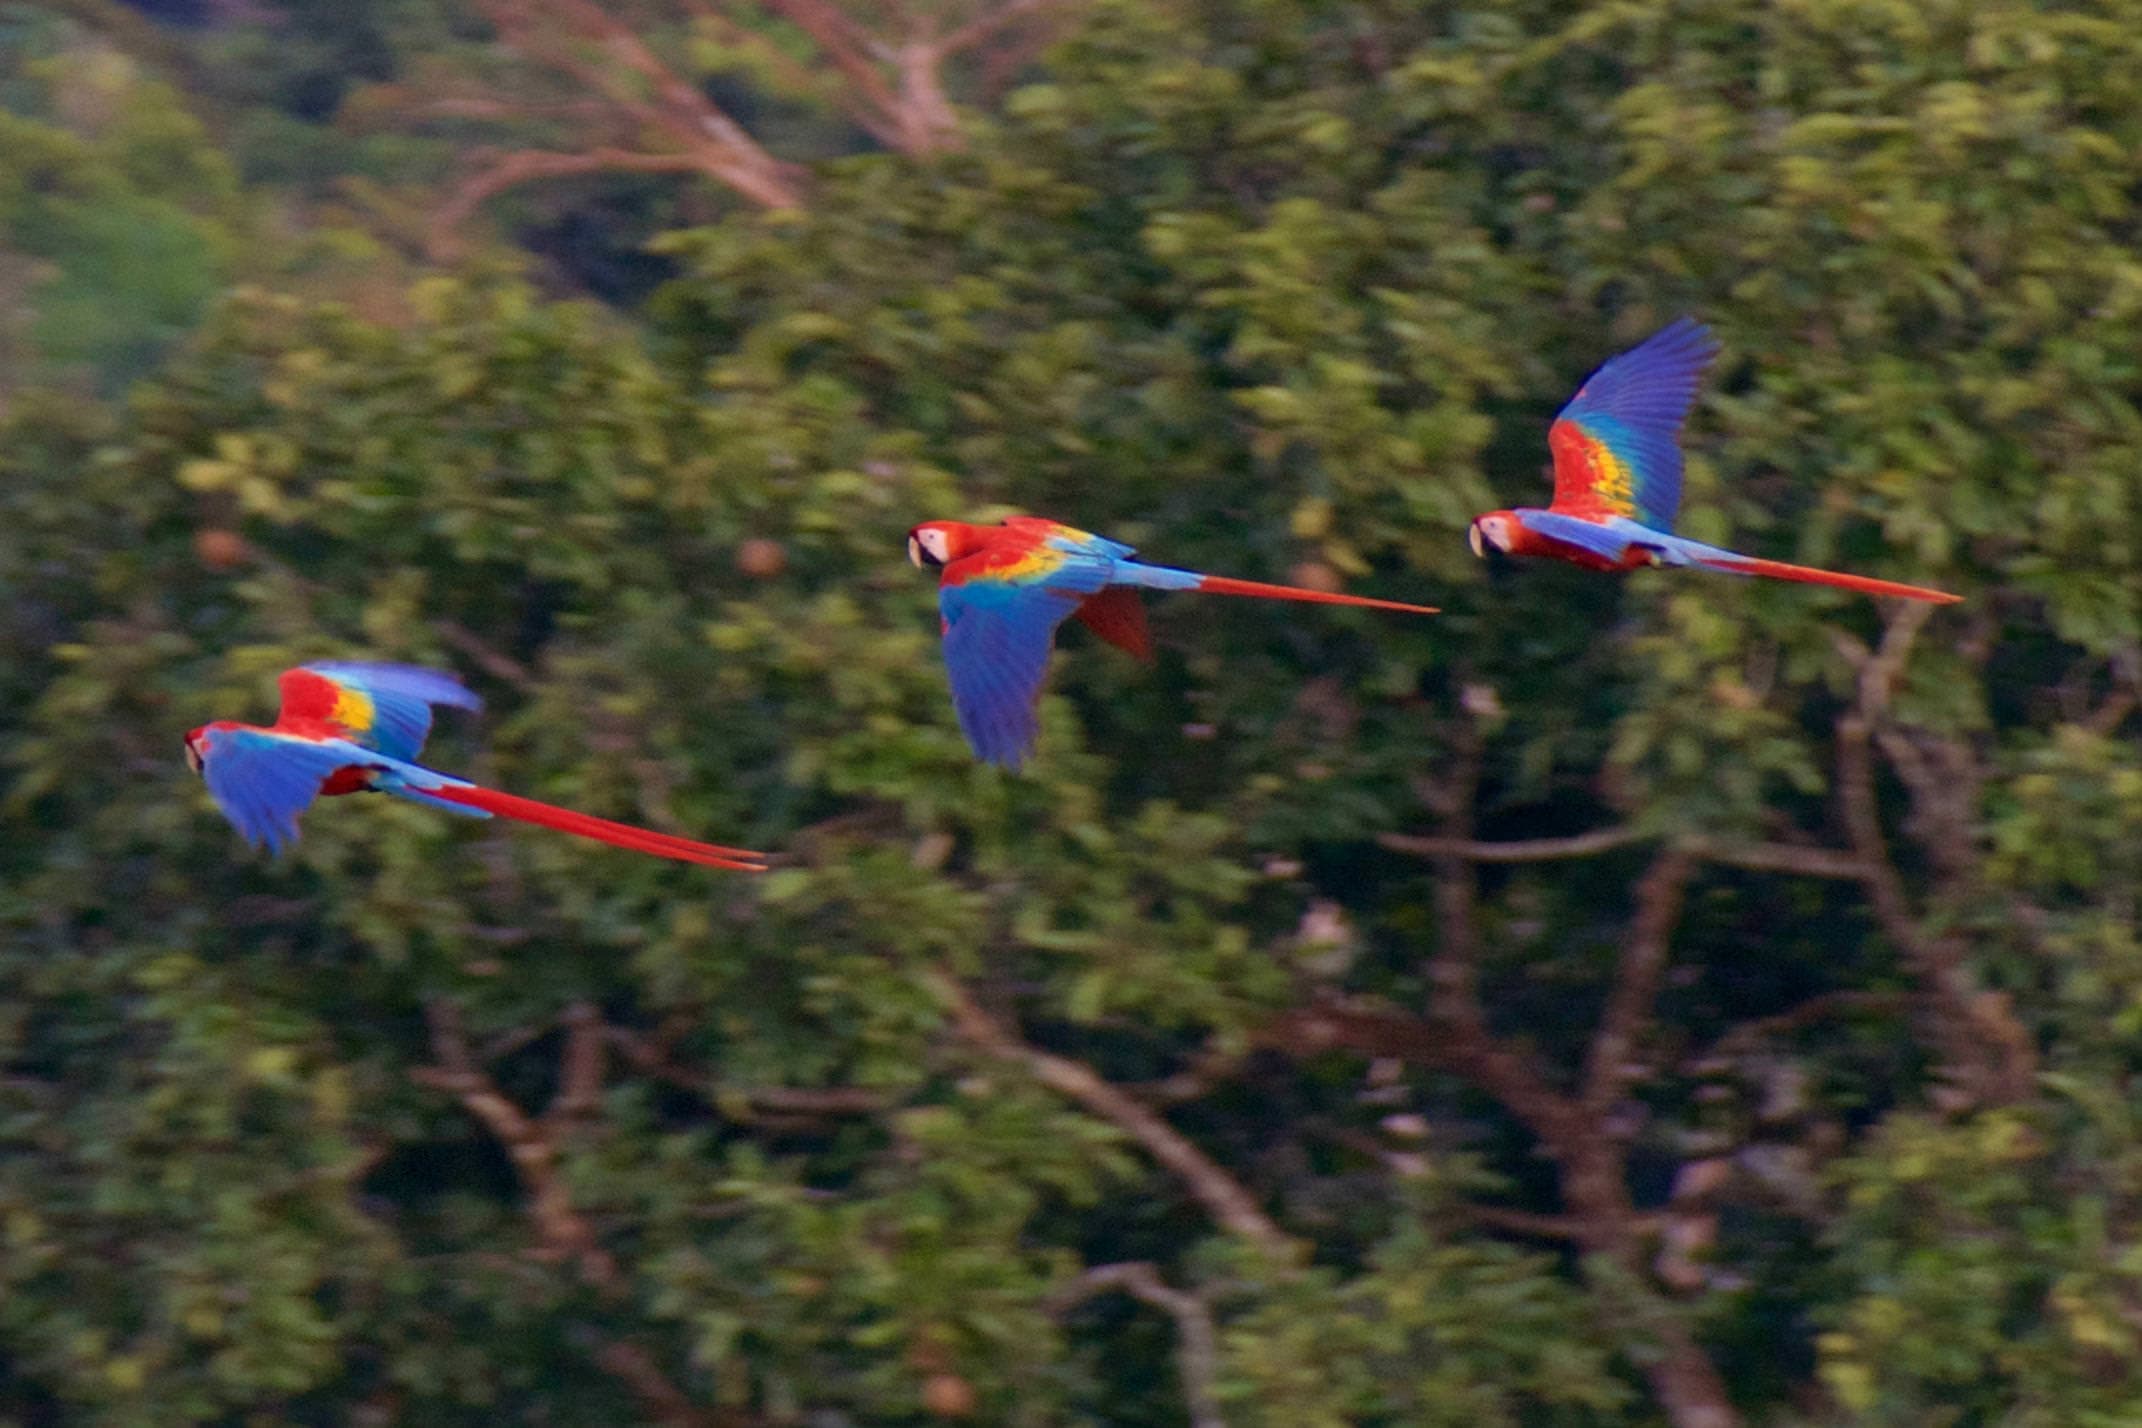 Brazil amazon cristalino lodge scarlet macaw flying past copyright thomas power pura aventura